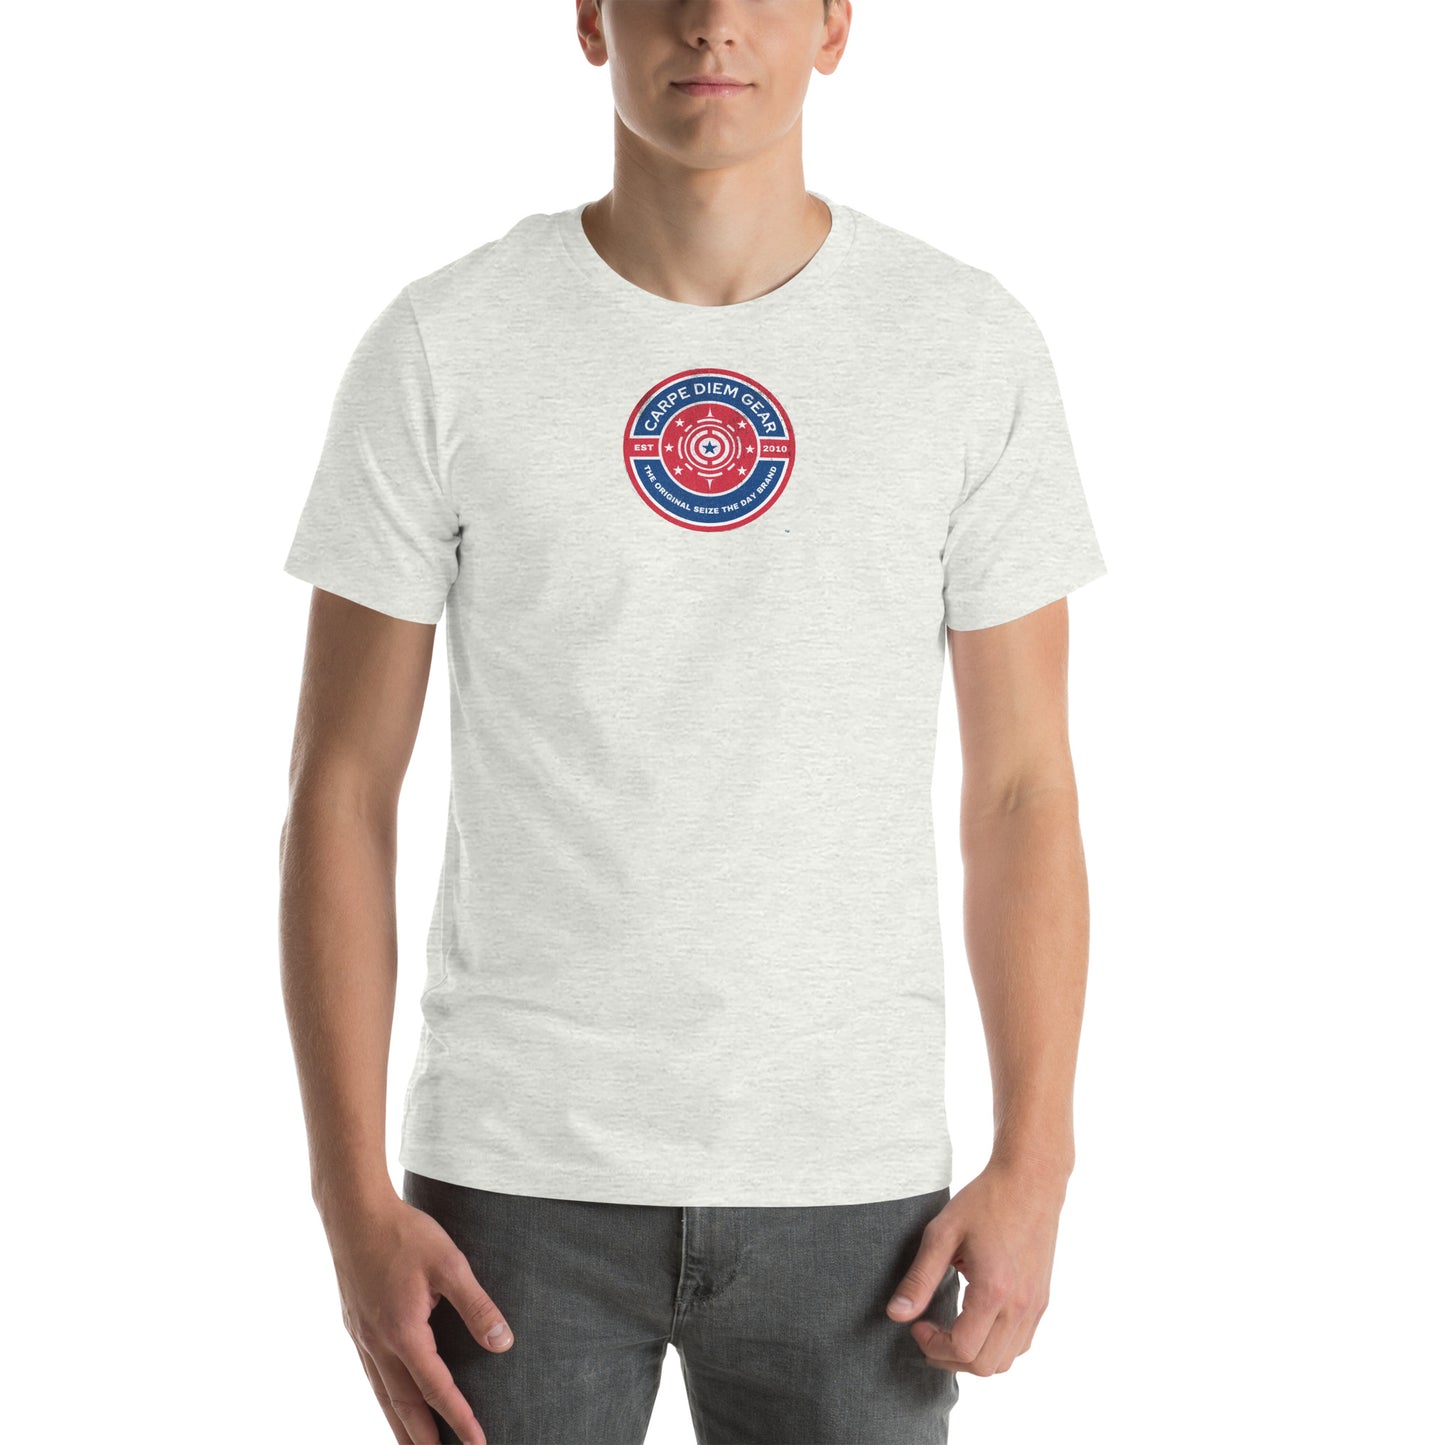 Carpe Diem Gear | America  | United We Stand Stamp DELUXE | Unisex 100% Cotton T-Shirt